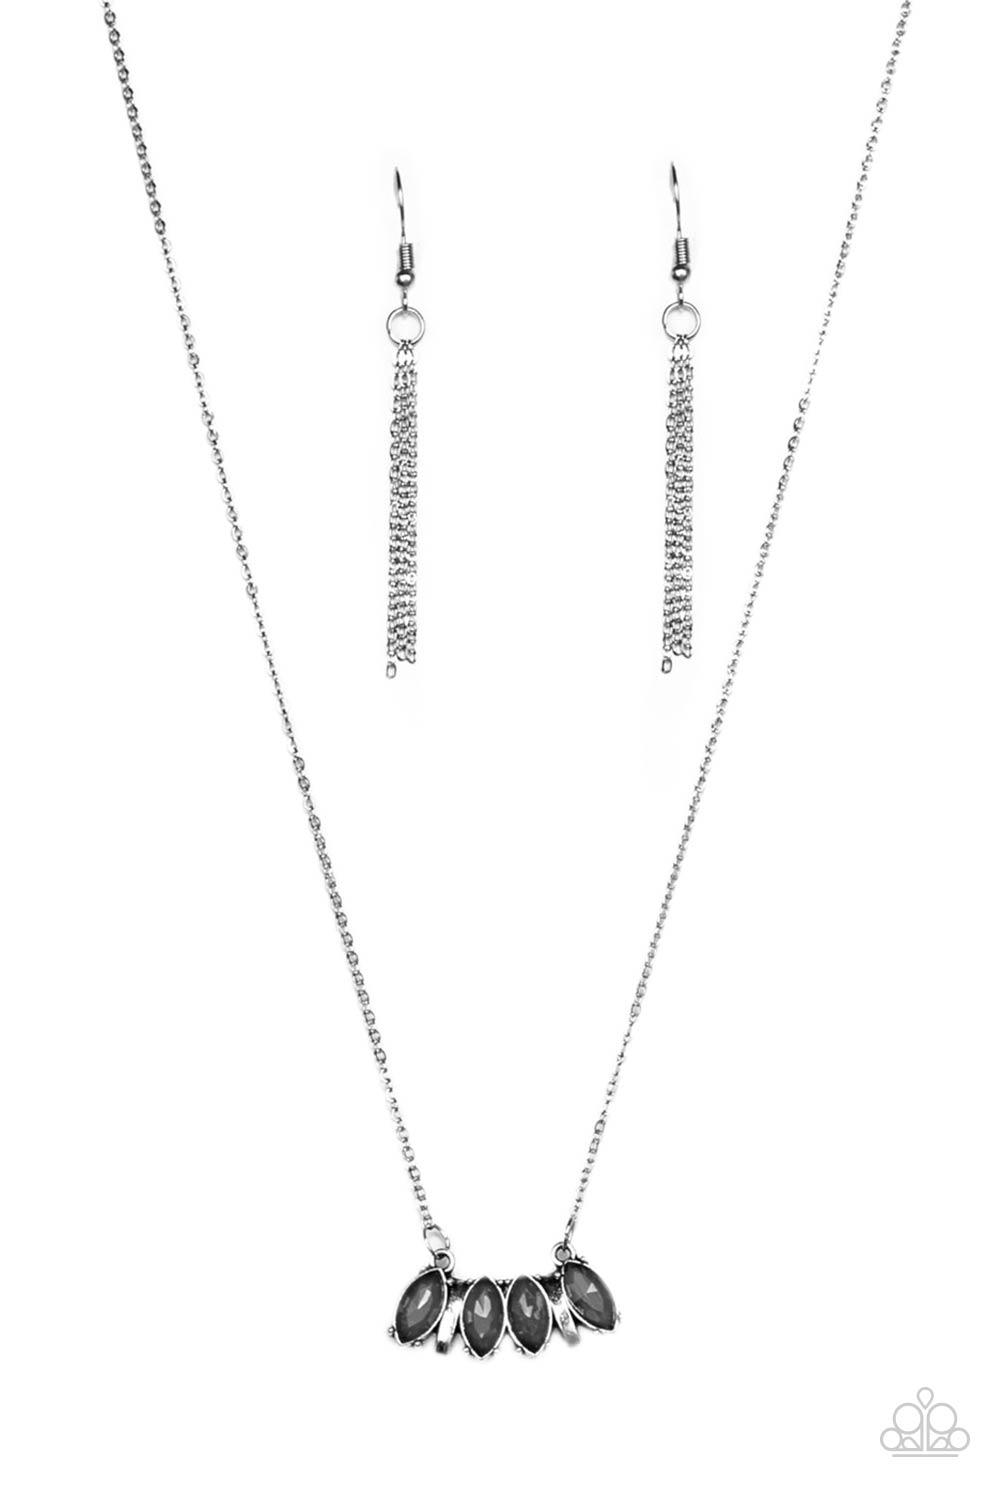 Deco Decadence - Silver Necklace freeshipping - JewLz4u Gemstone Gallery